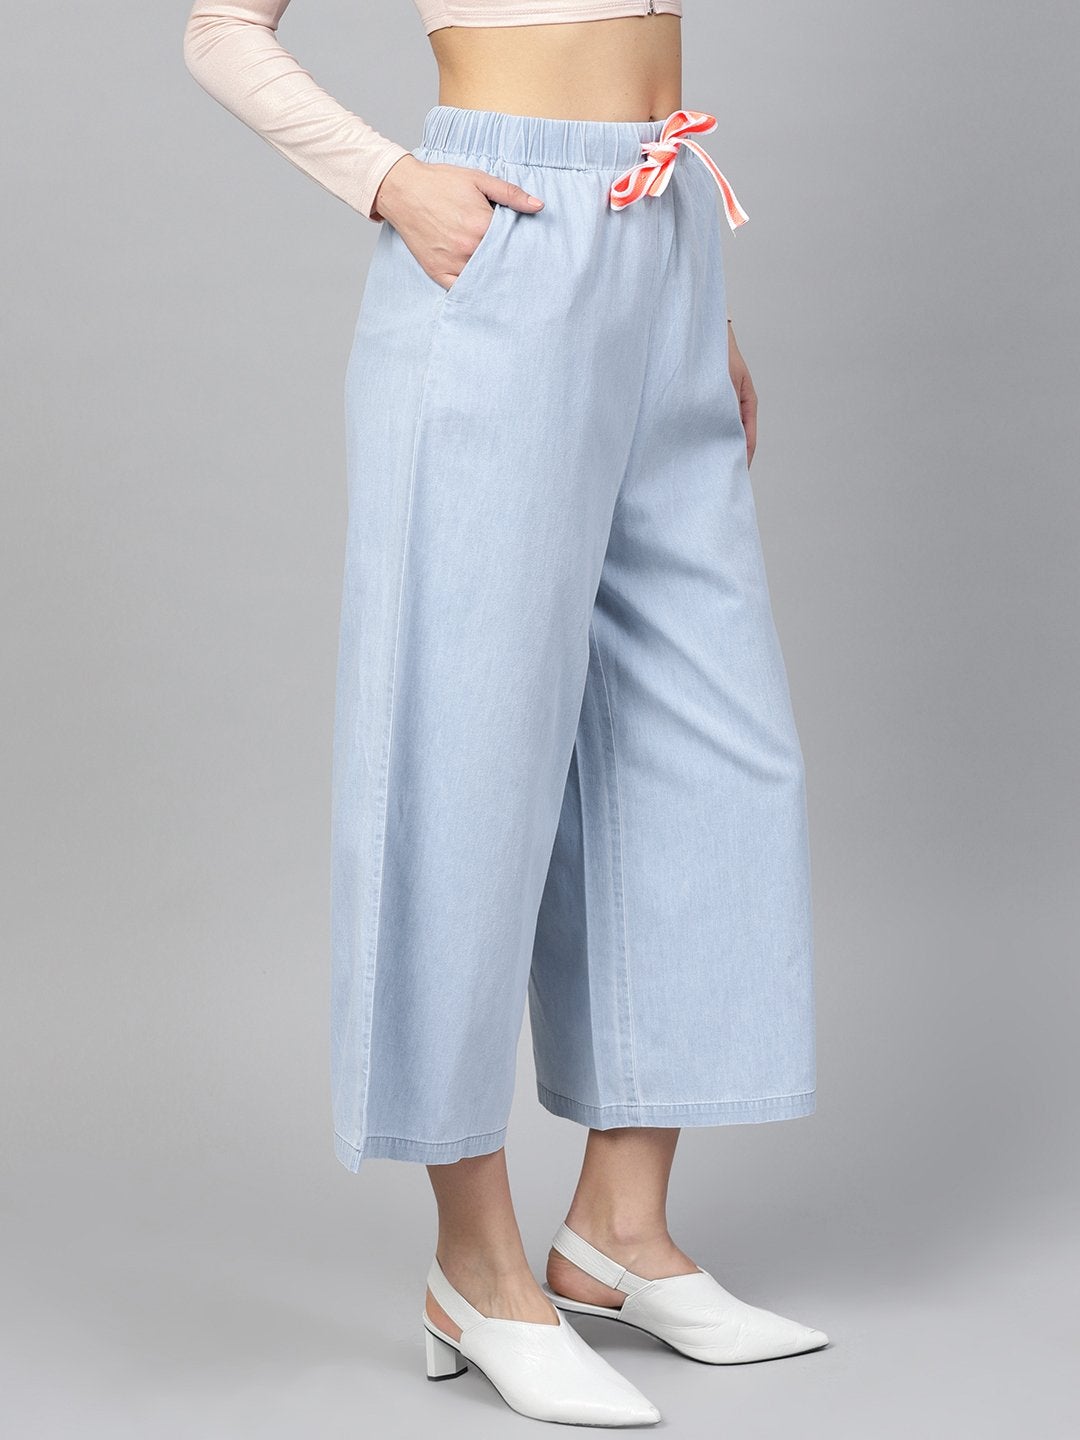 Women's Blue Denim Neon Drawstring Pants - SASSAFRAS